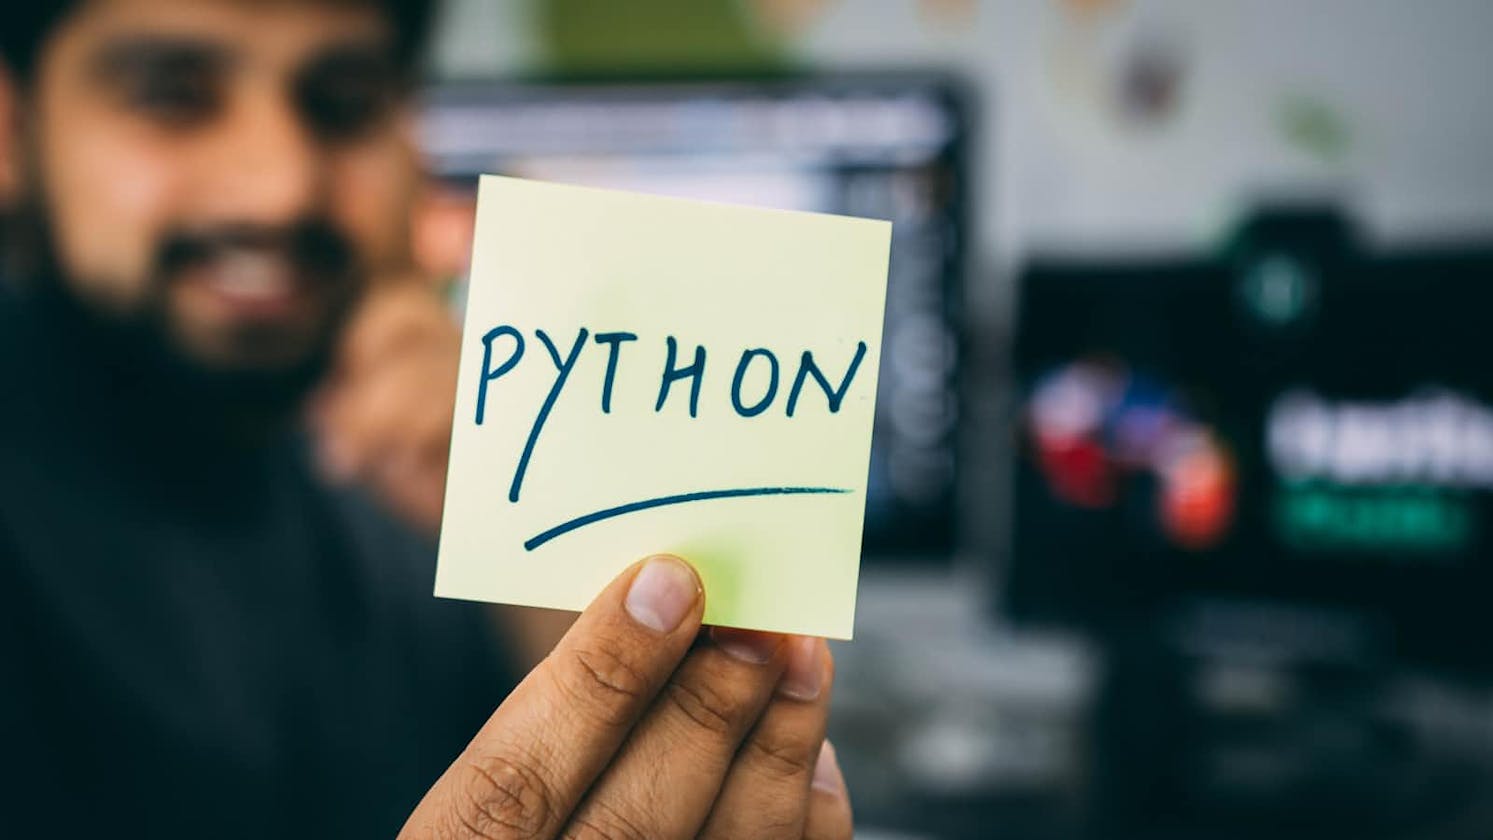 Basics of Python for DevOps Engineers